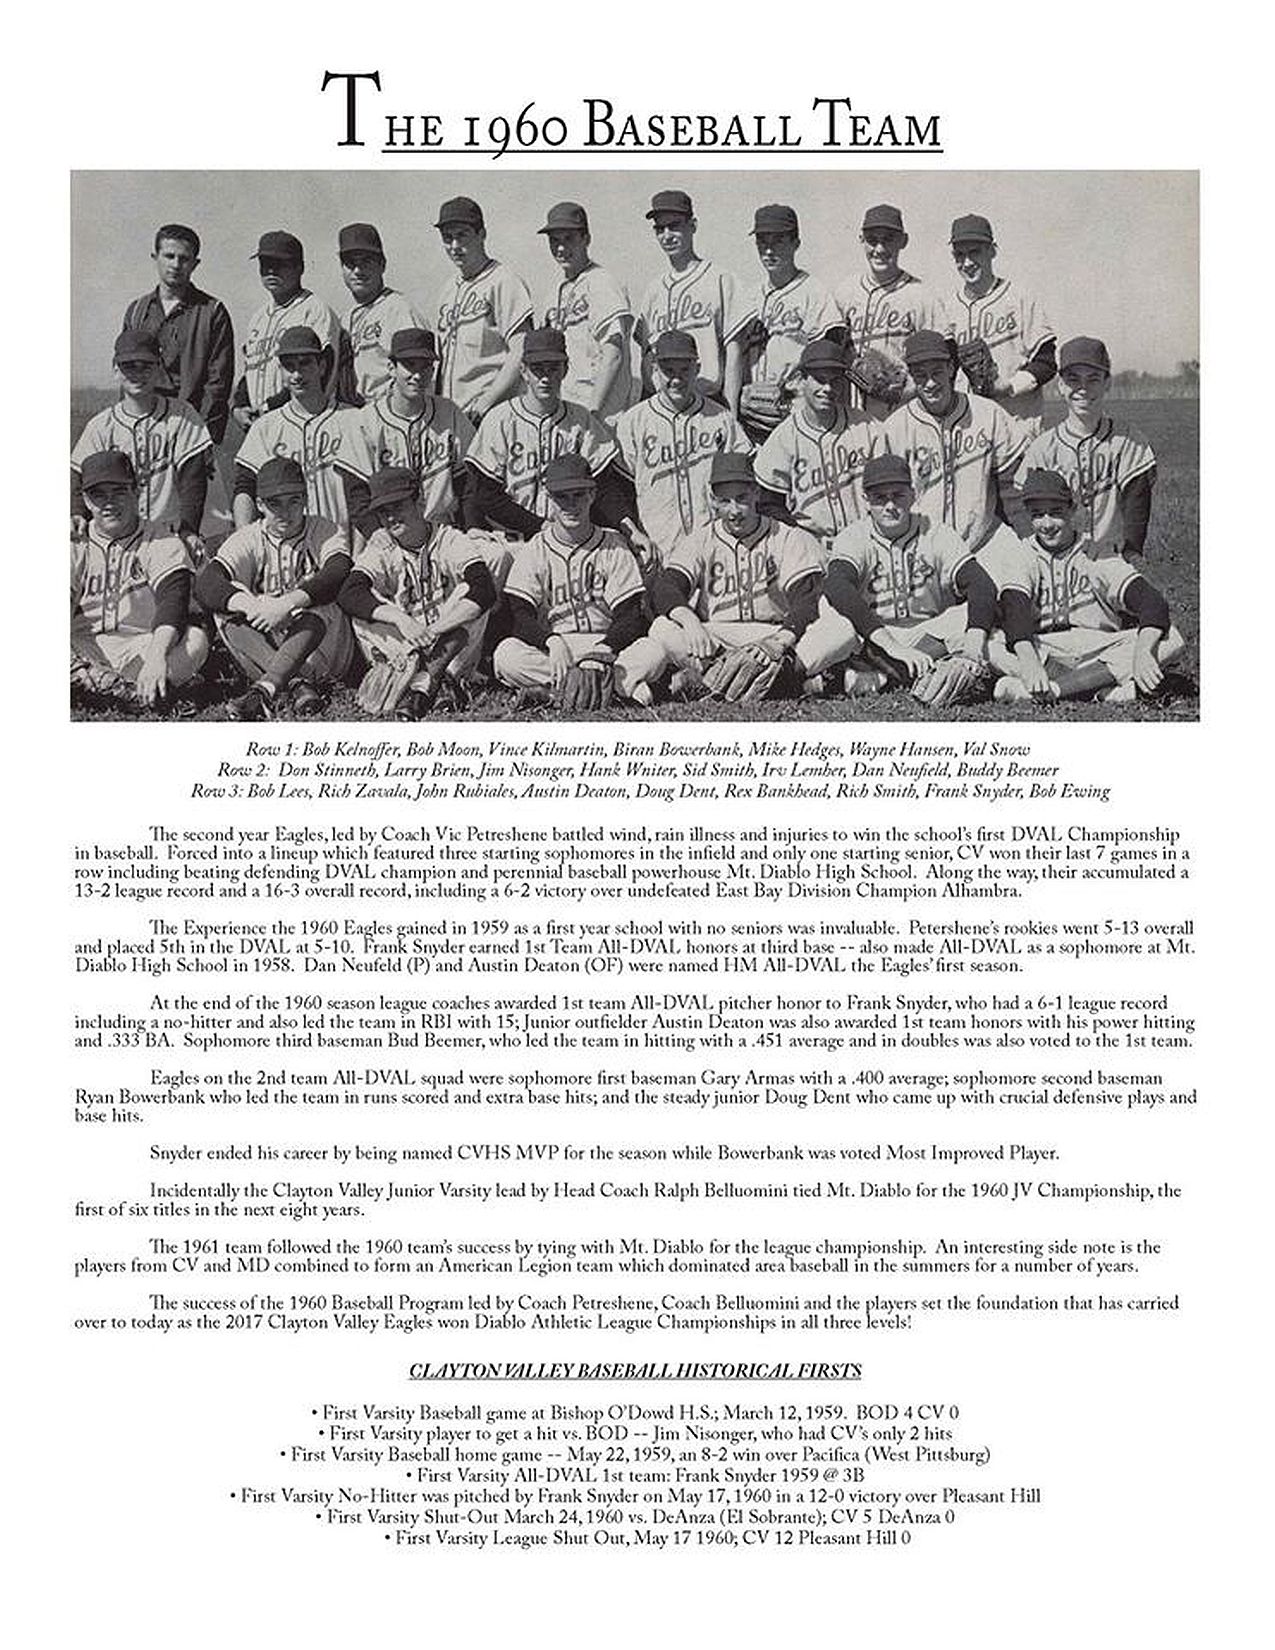 1960 Boys Baseball Team